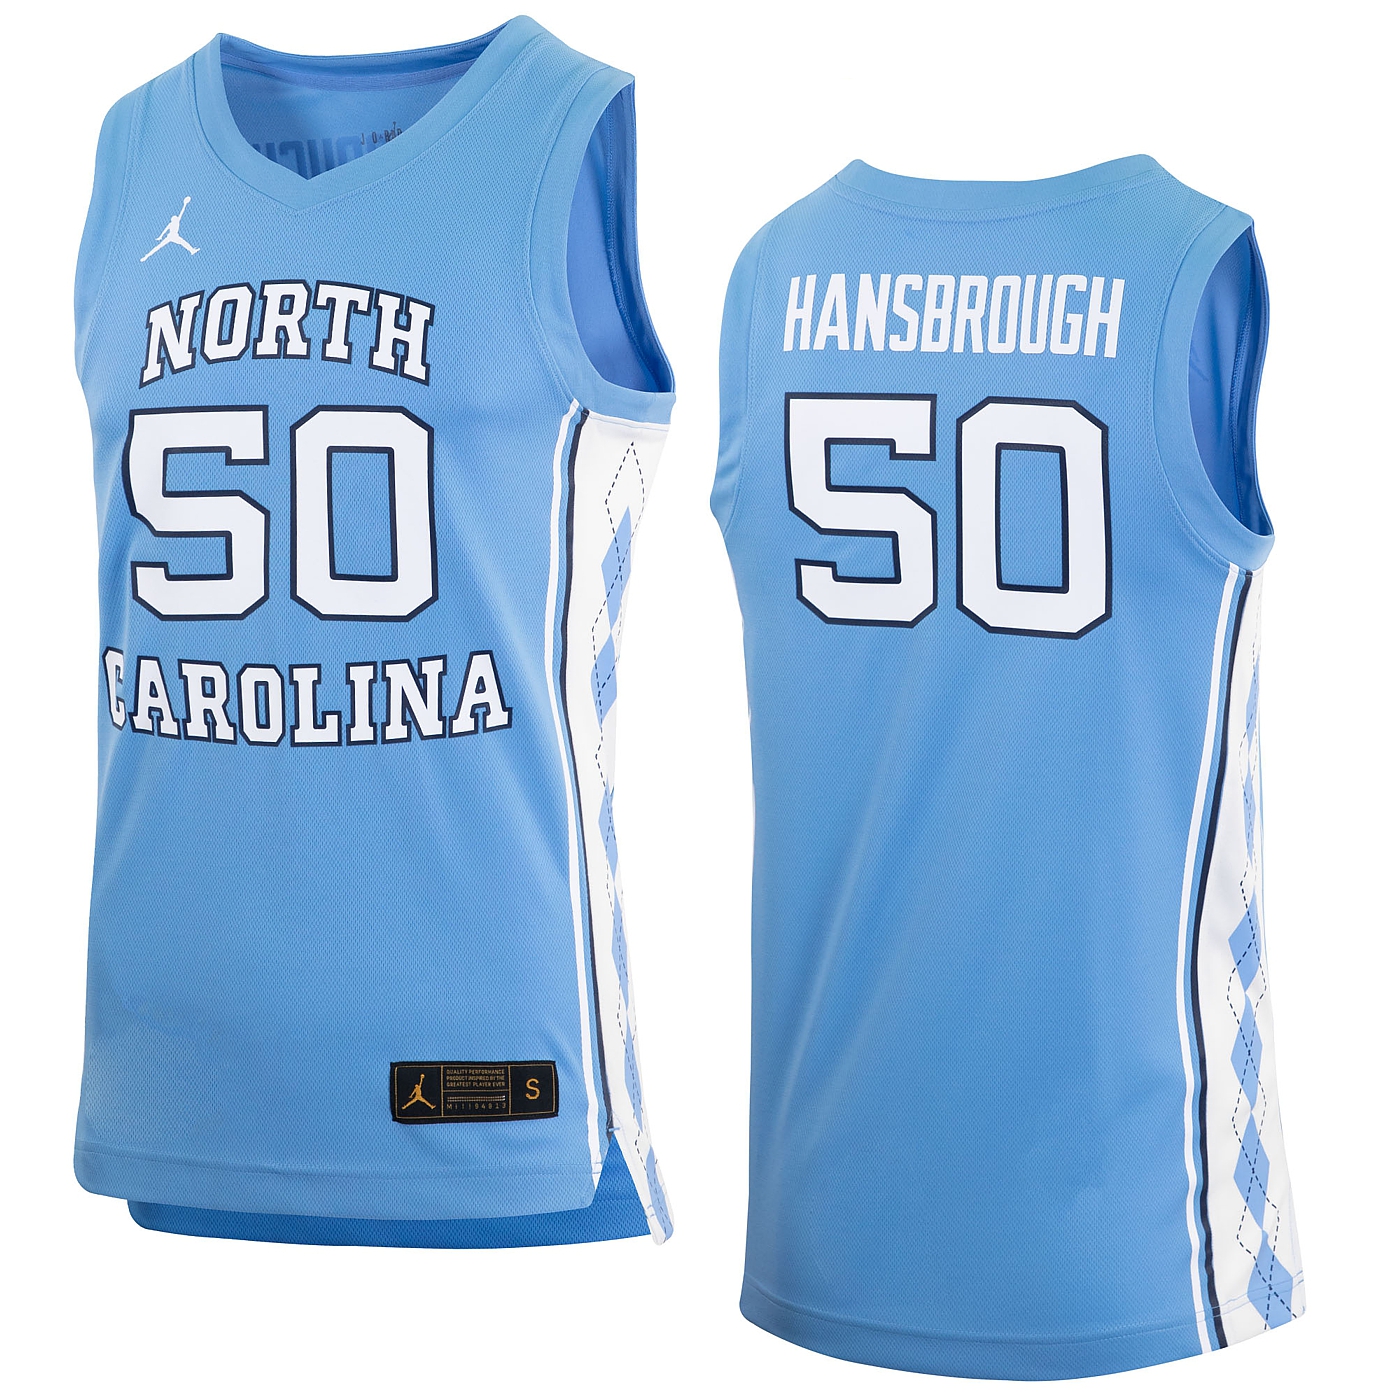 Nike Replica #50 Tyler Hansbrough Basketball Jersey (CB) by Nike